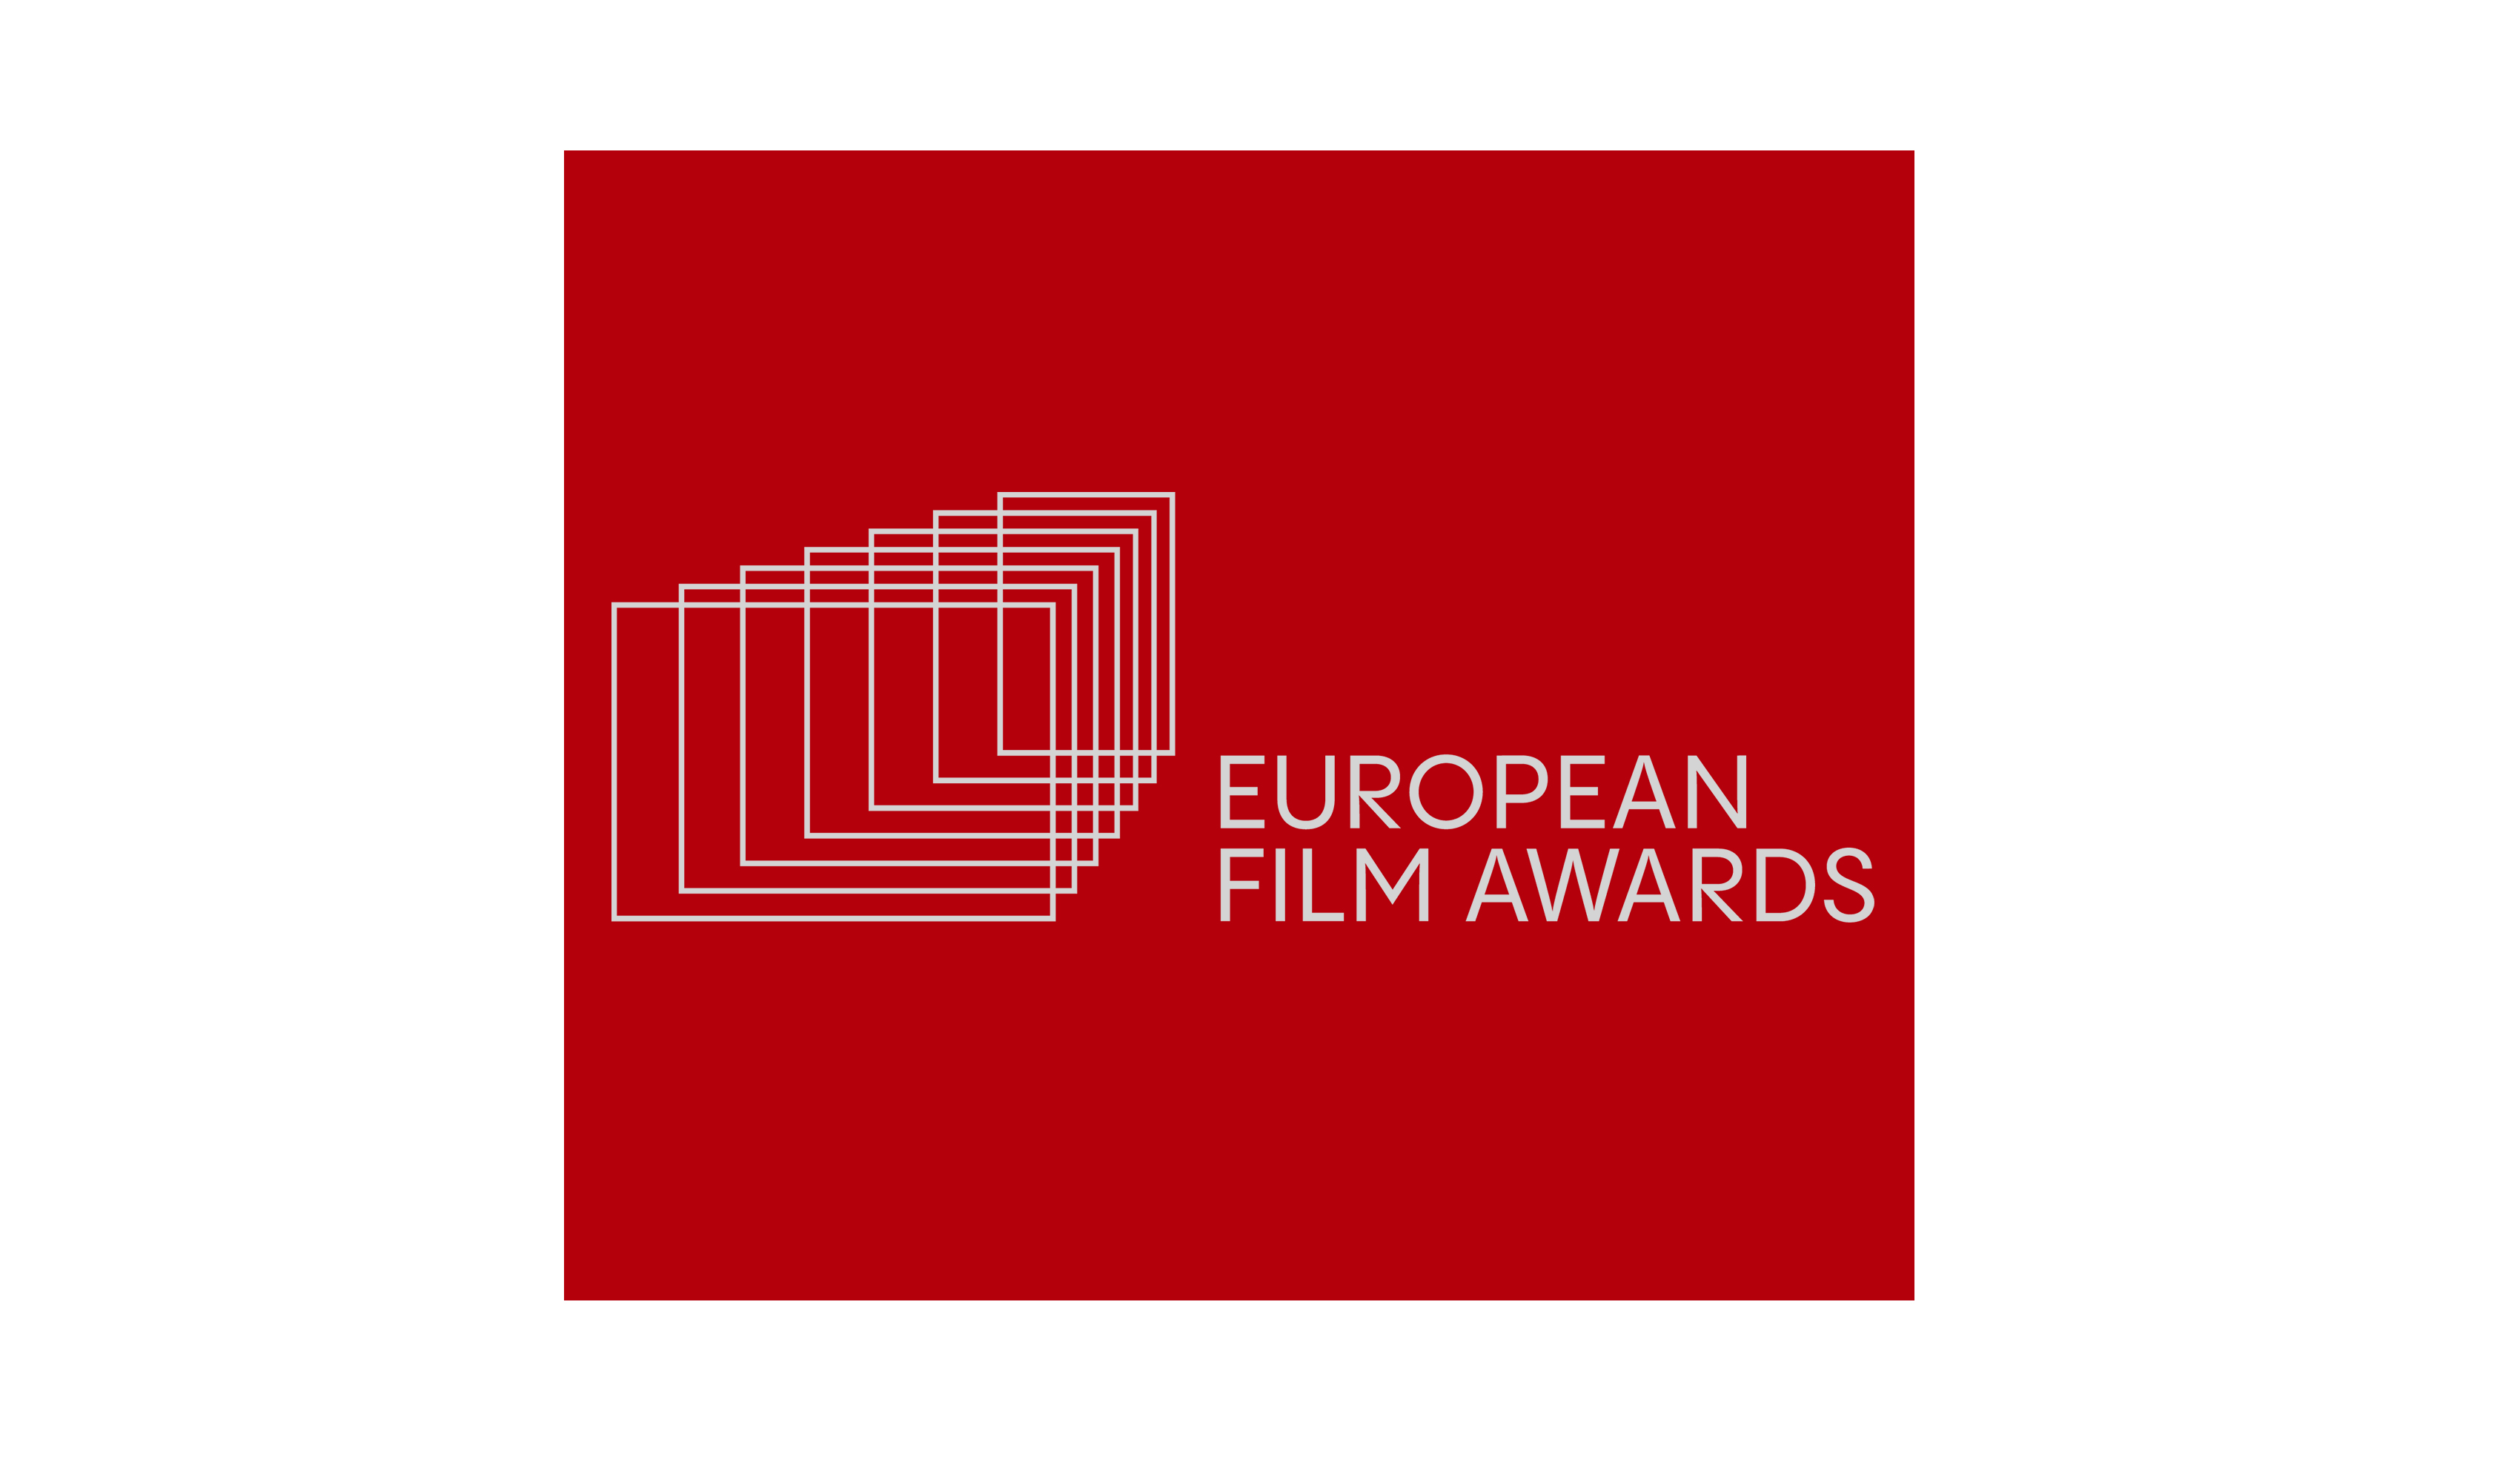 EUROPEAN FILM AWARDS